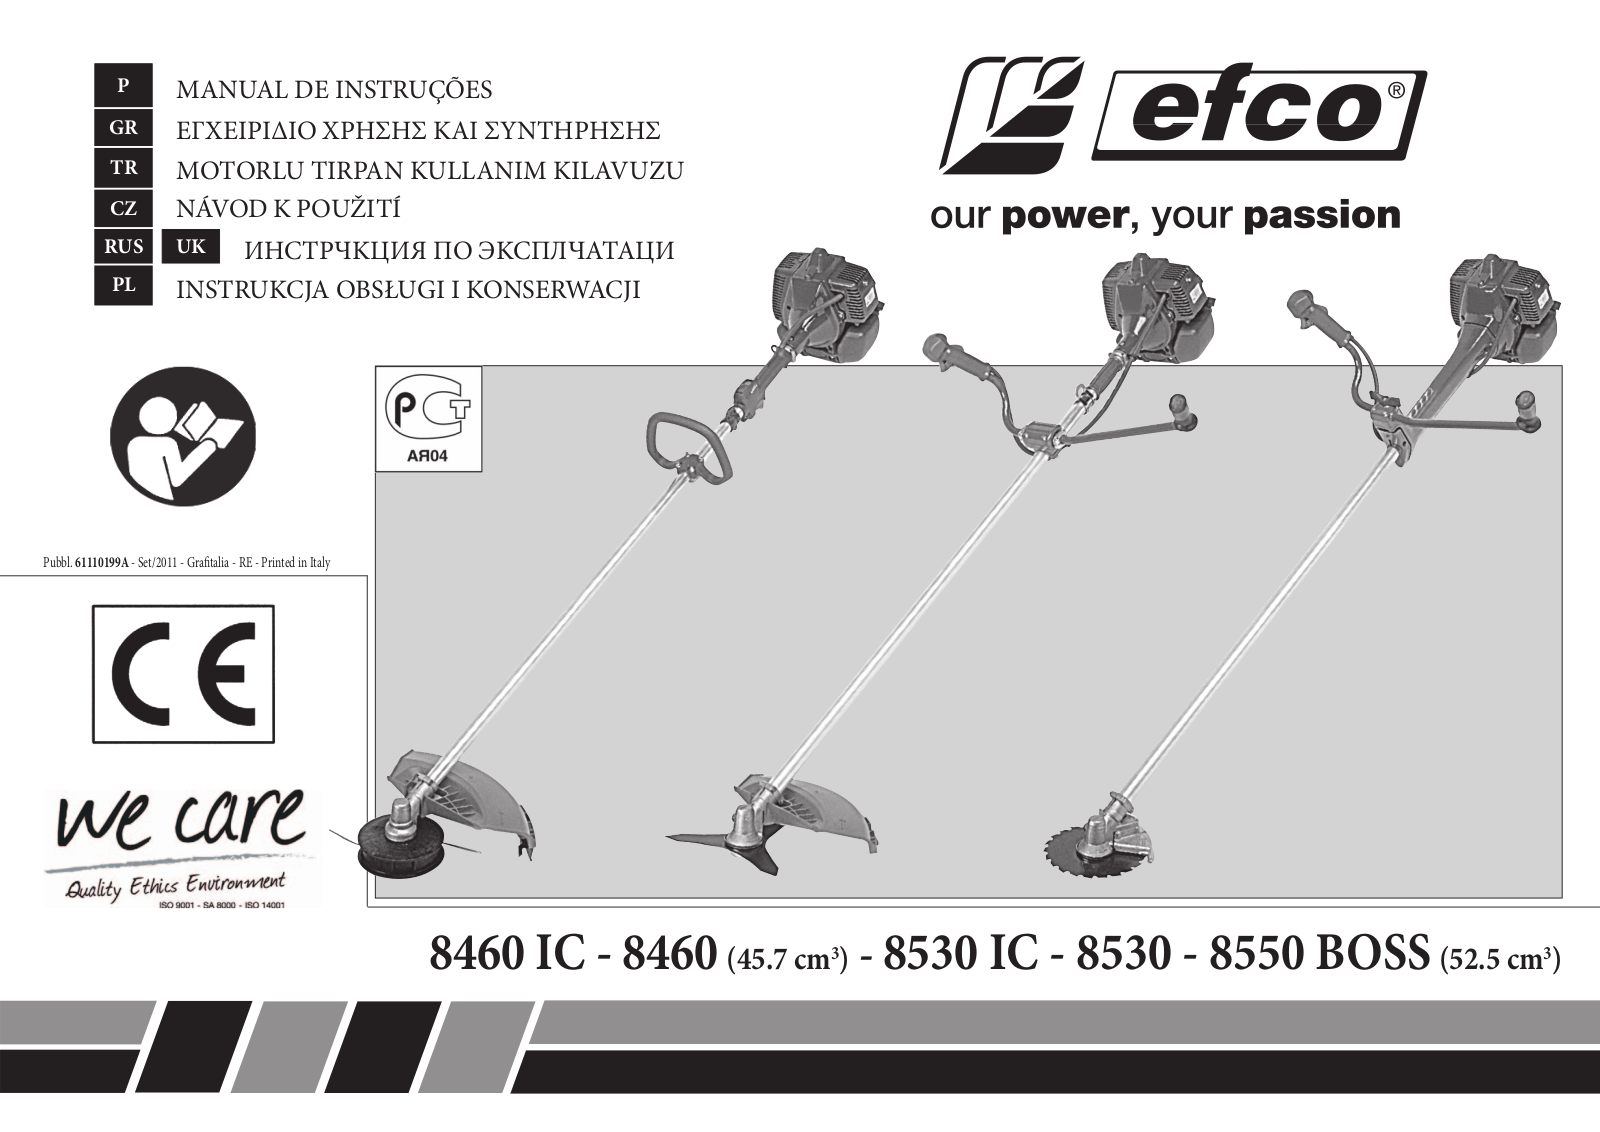 Efco 8550 BOSS User Manual